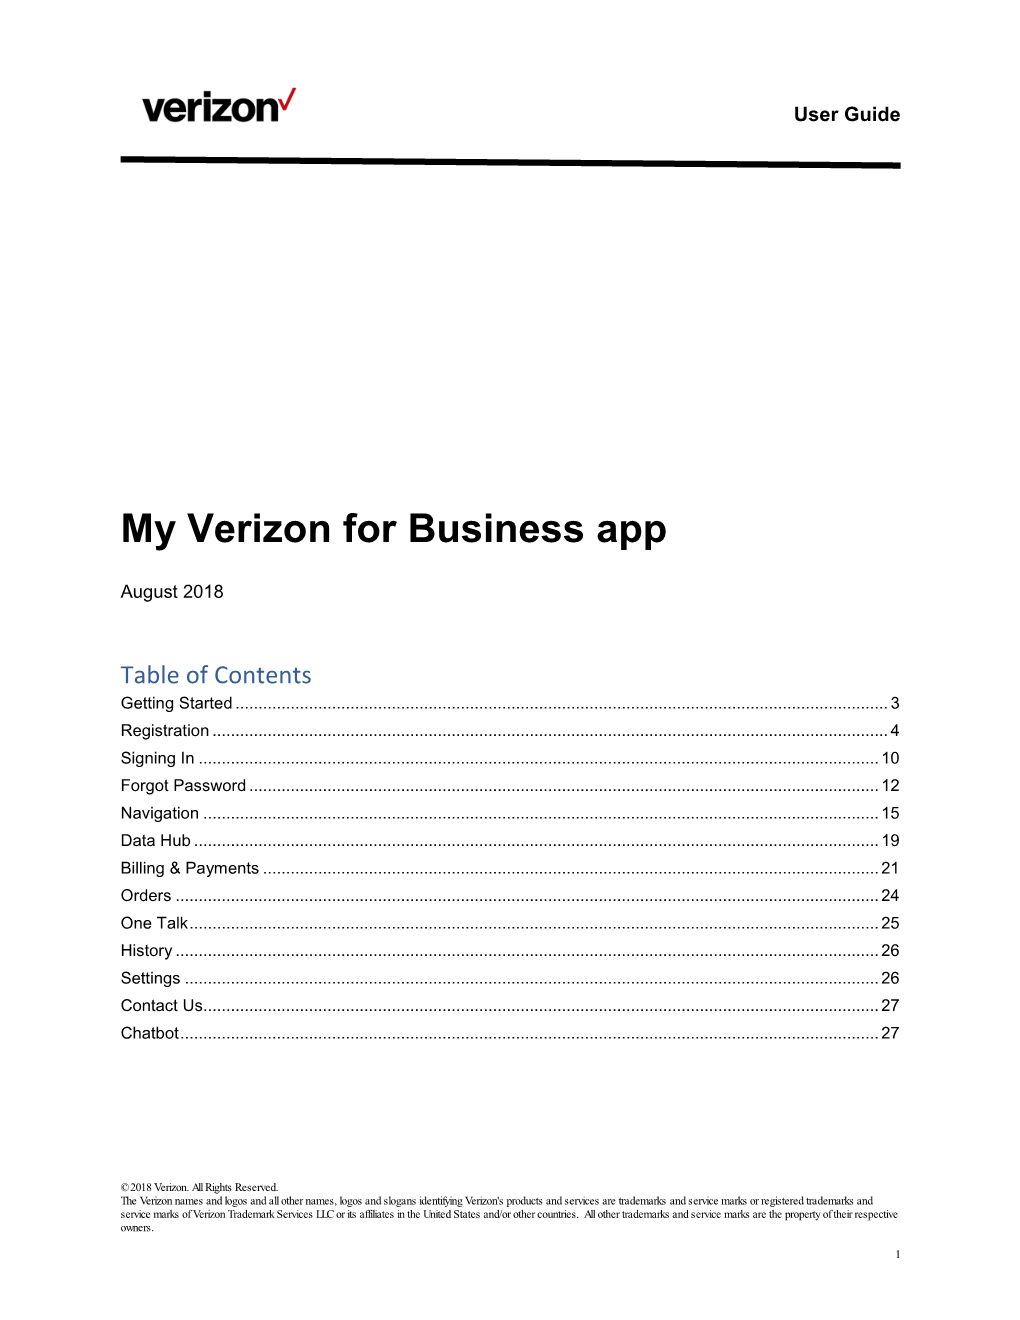 My Verizon for Business App